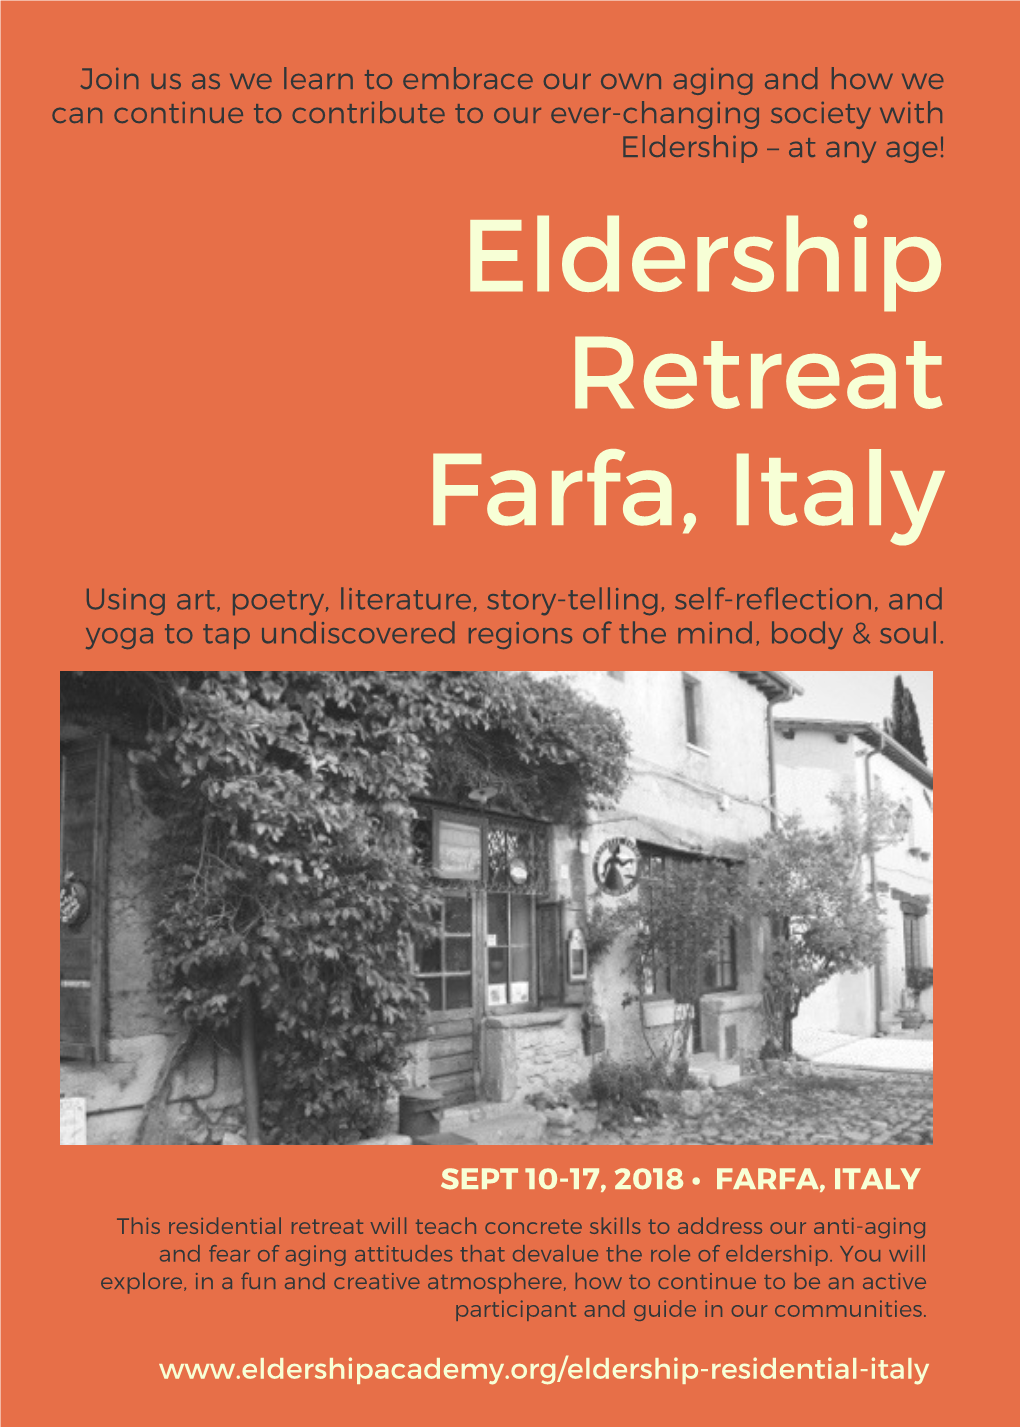 Eldership Residential Retreat Farfa, Italy